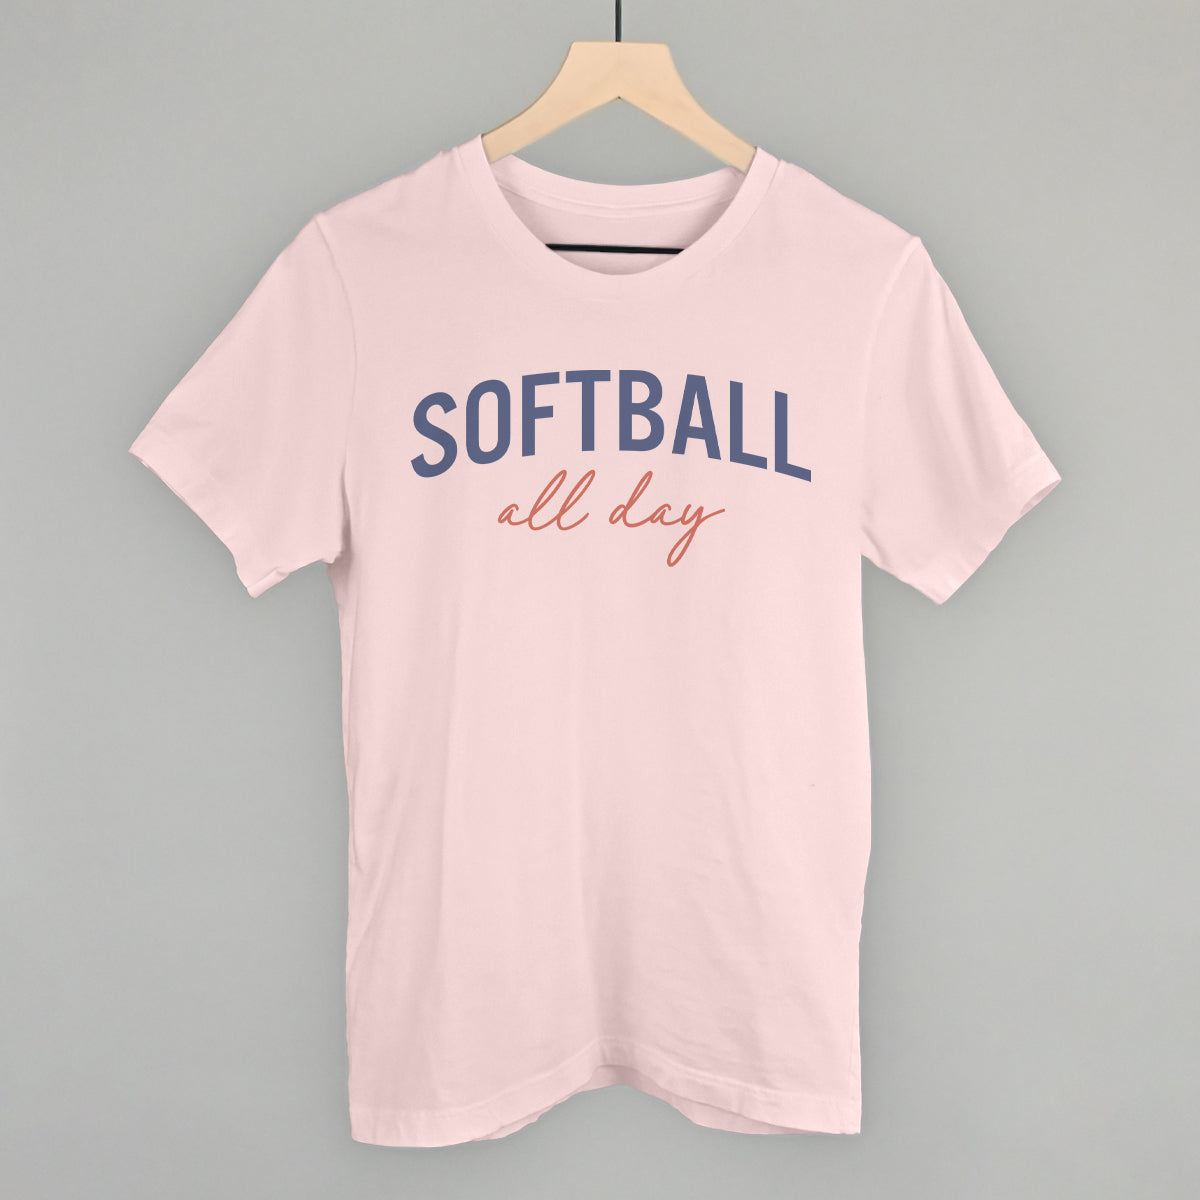 Softball All Day (Script)